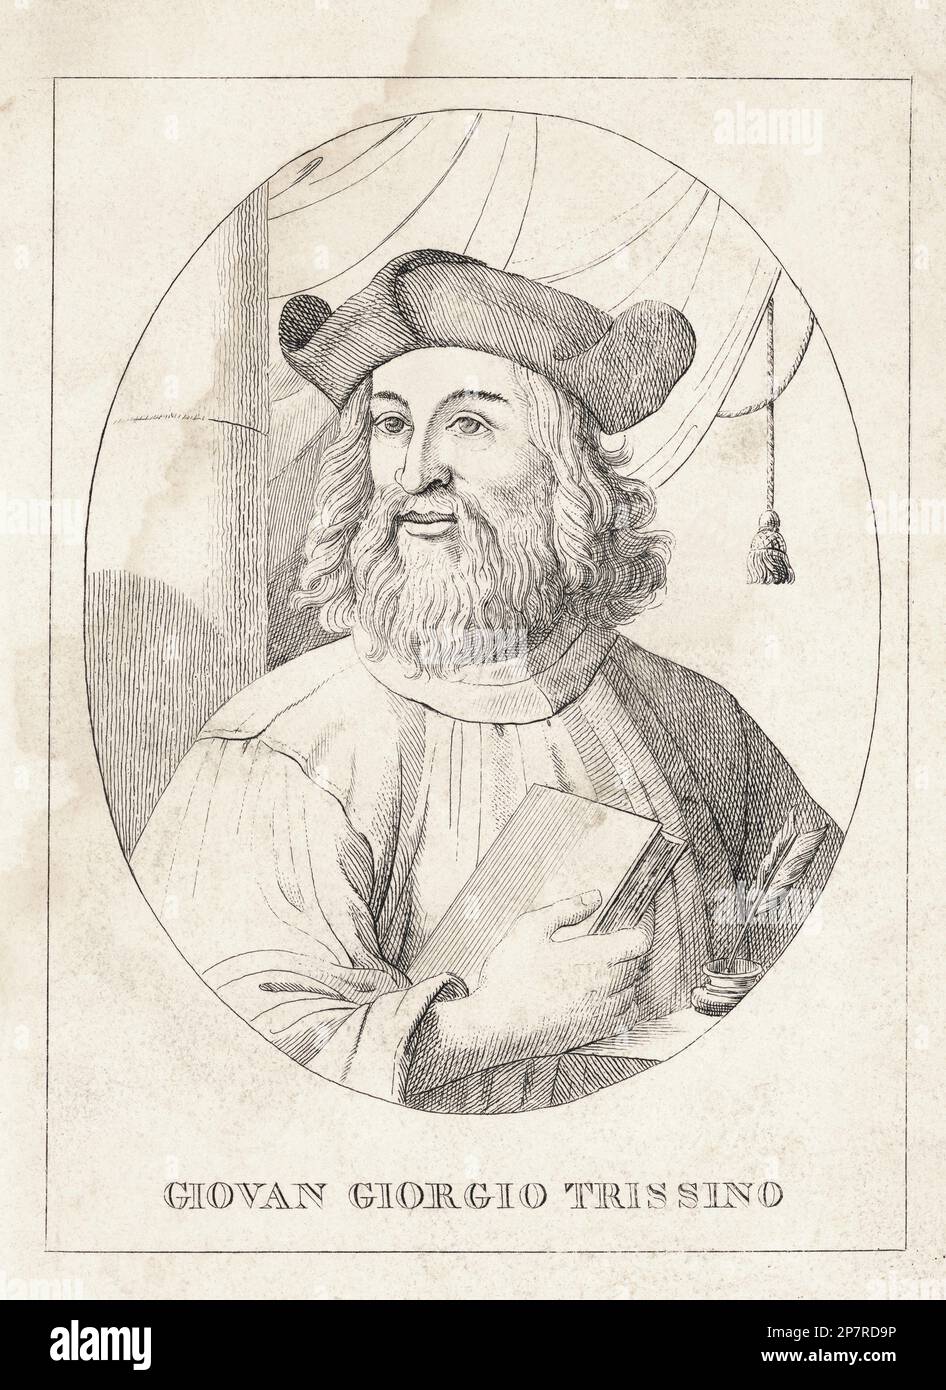 GIAN GIORGIO TRISSINO  ( 1478 - 1550 ) was an Italian Renaissance humanist,  poet , dramatist , diplomat and grammarian  - POETA - POESIA - POETRY - LETTERATURA - engraving - incisione - portrait - ritratto -  beard - barba - letterato - ITALY - Giovan  - GRAMMATICO - GRAMMATICA - RINASCIMENTO - book - libro - hat - cappello - beard - barba - UMANESIMO - UMANISTA - DRAMMATURGO - playwriter - TEATRO - THEATRE - THEATER ----  Archivio GBB Stock Photo